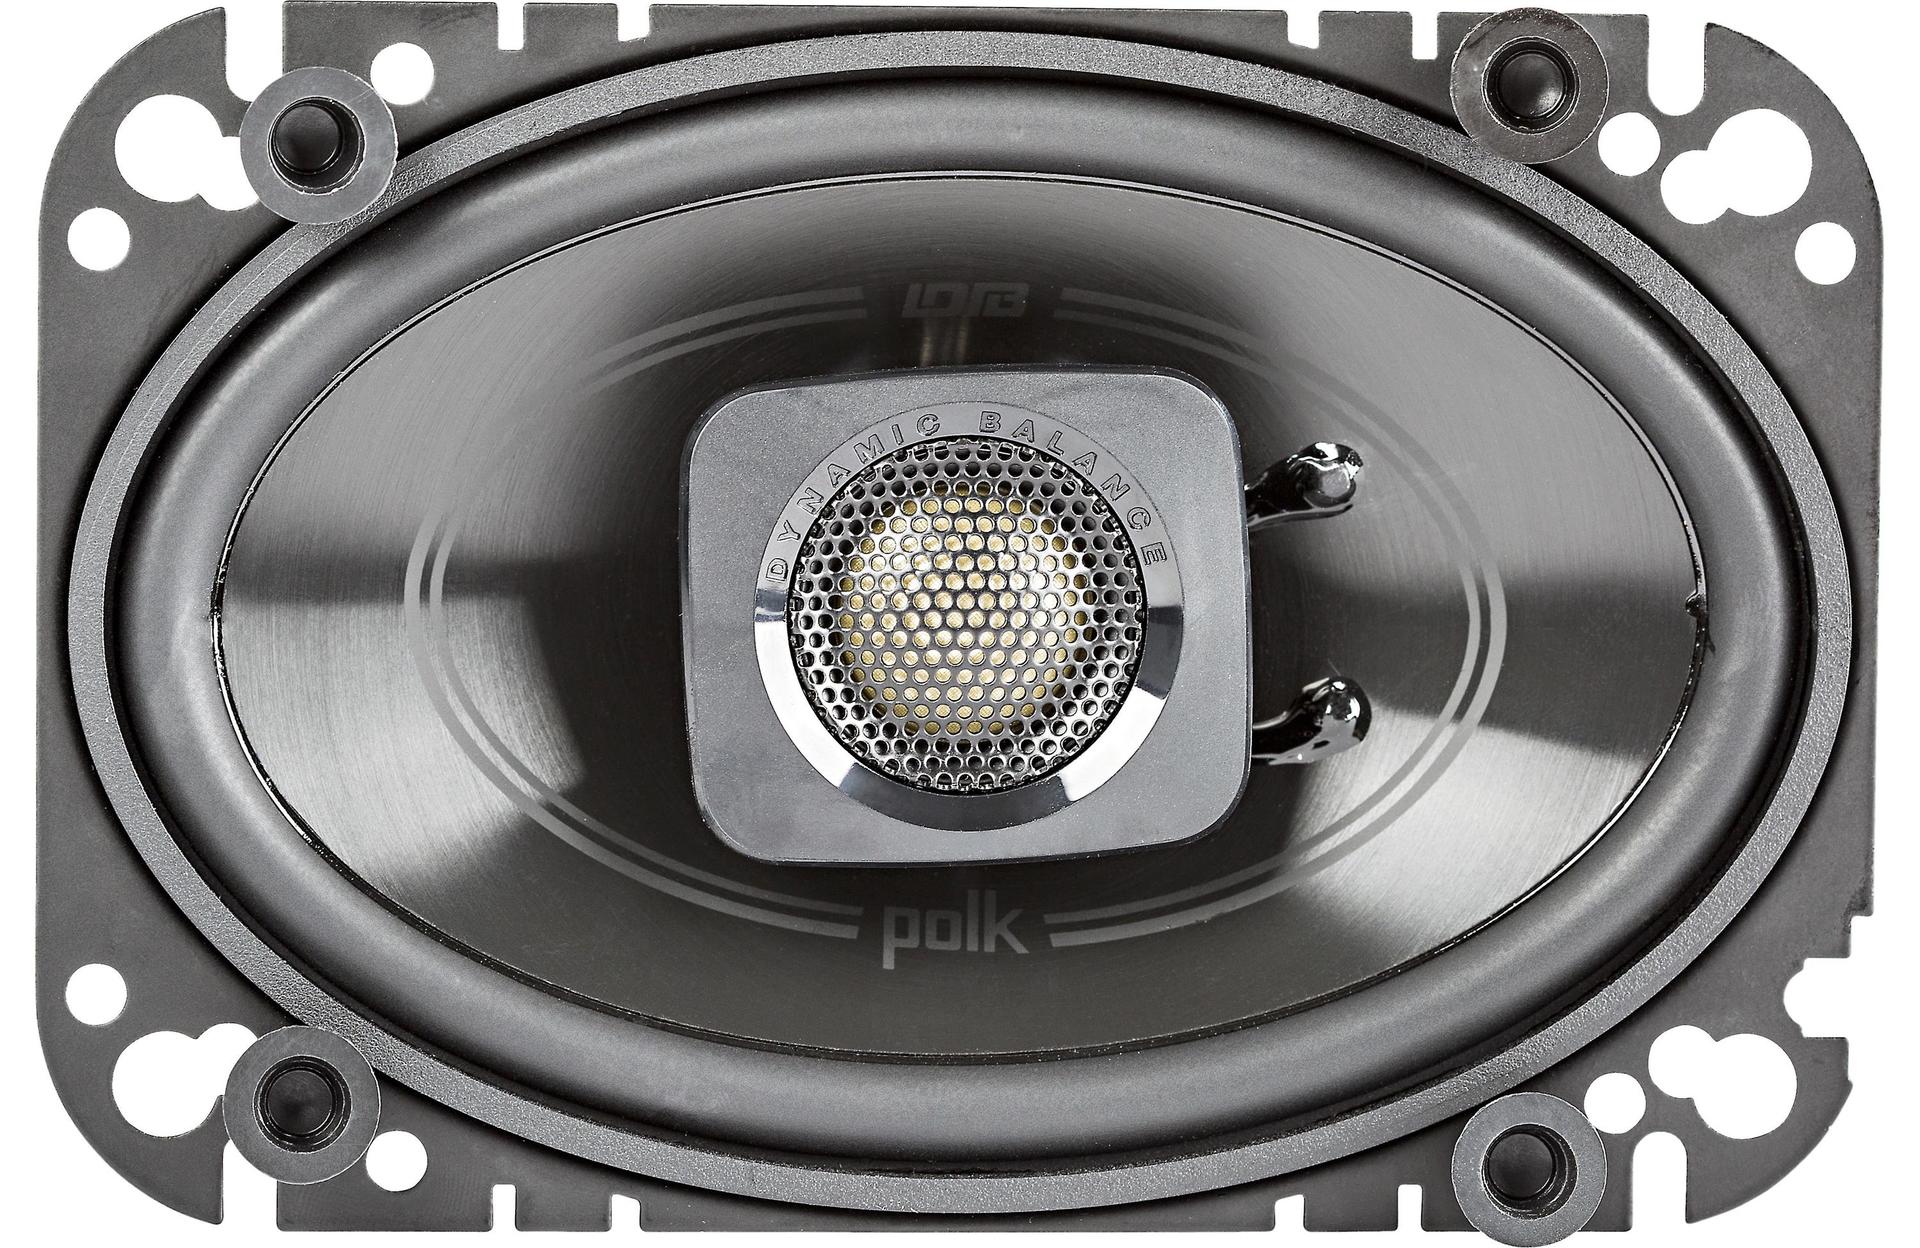 Polk Audio DB 462 DB+ Series 4"x6" 2-way car speakers (pair)